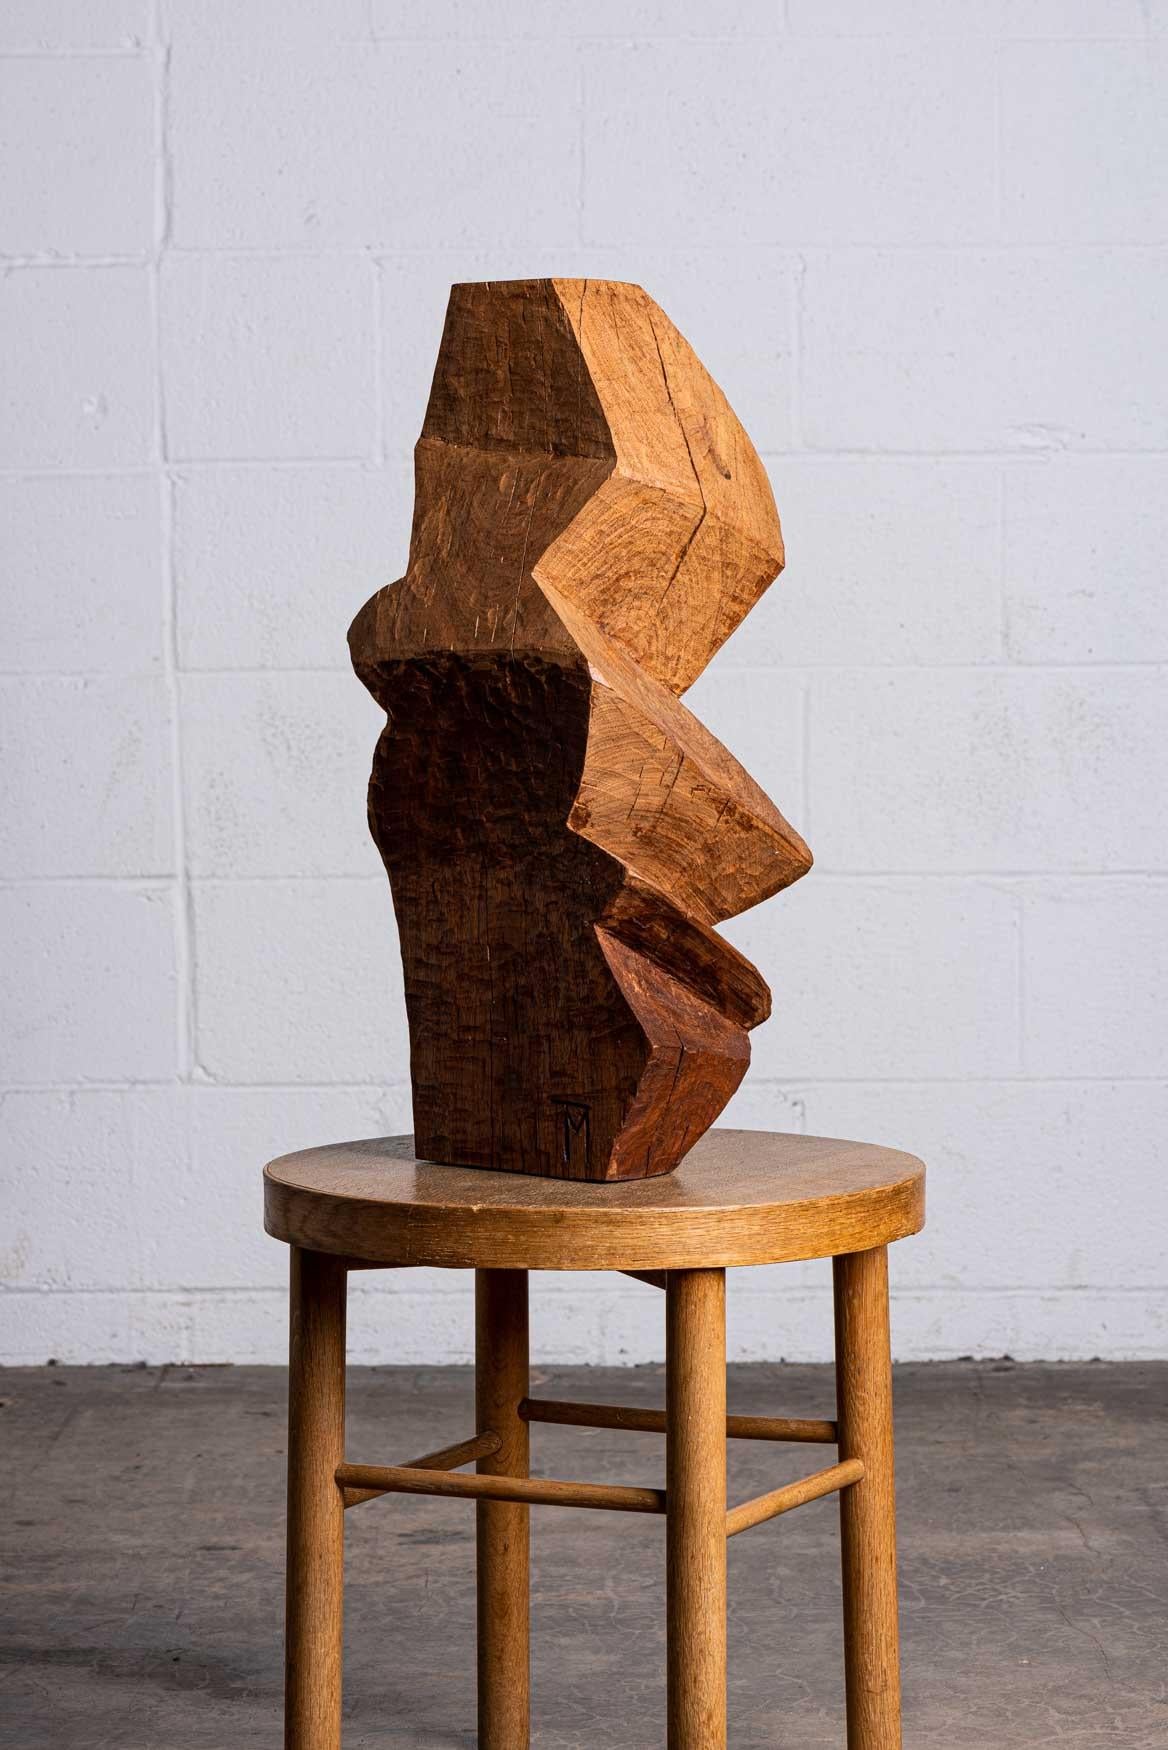 Abstract Wooden Sculpture 10